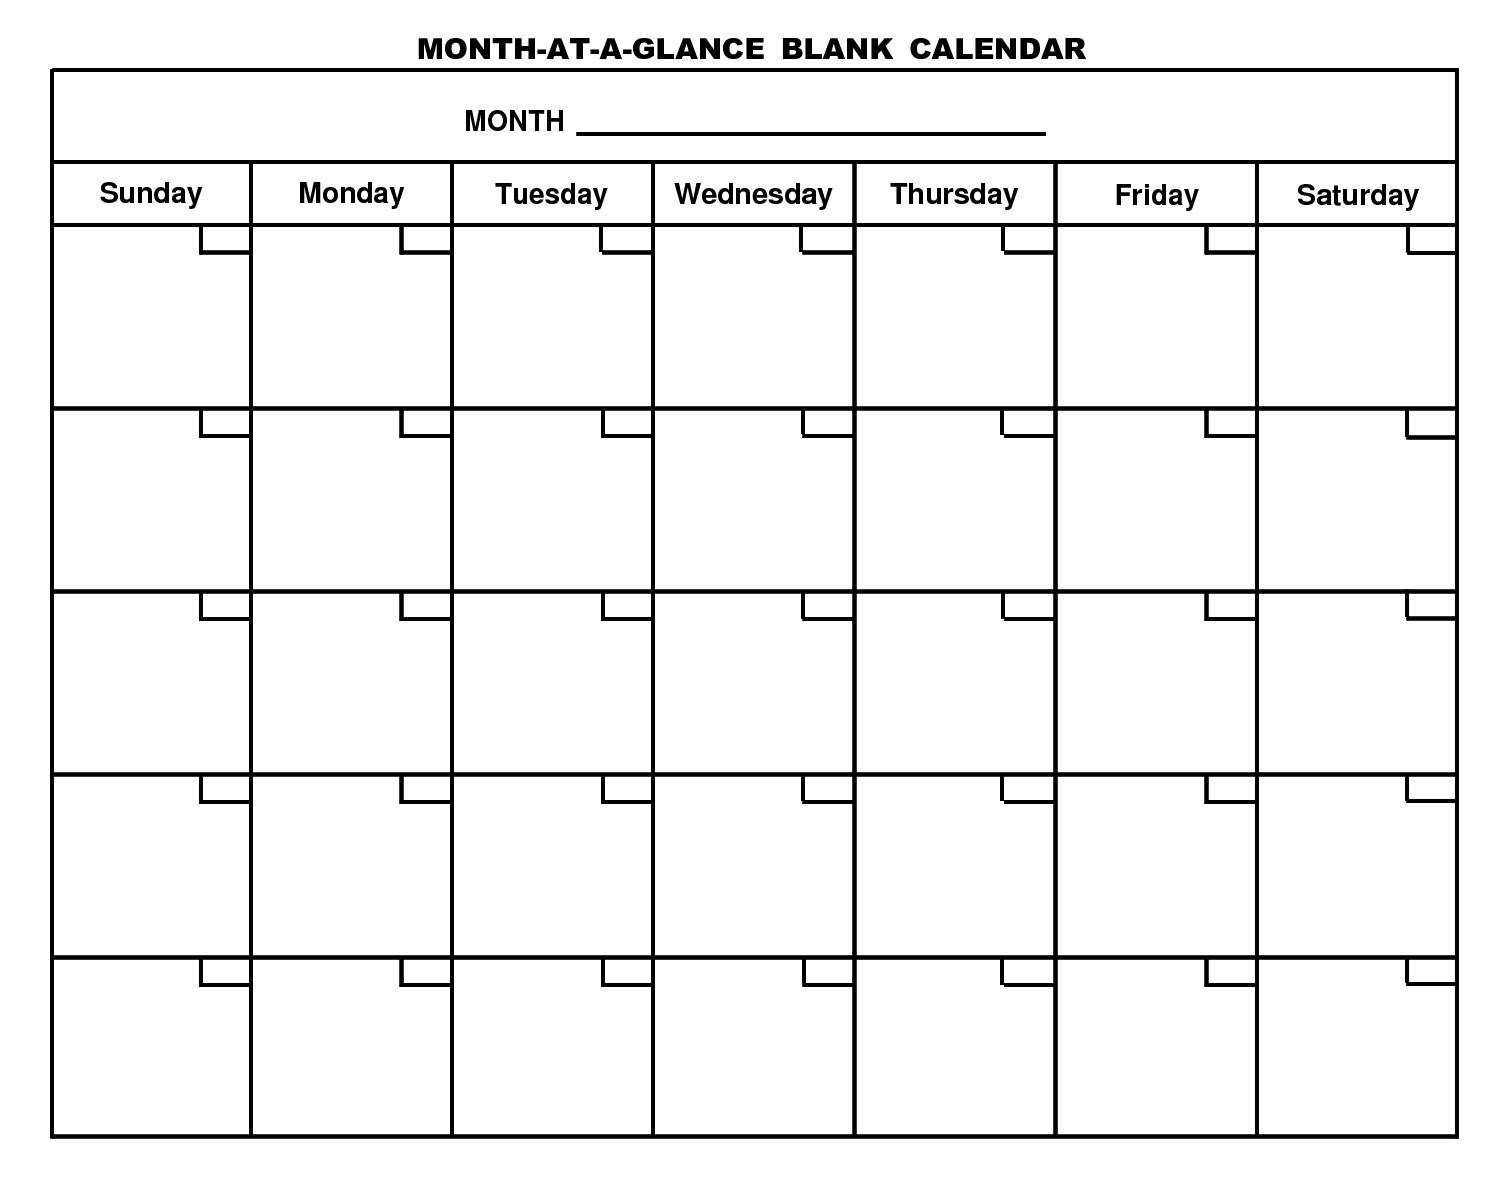 Calendar Template To Print Calendar Month Printable Inside-Printable Monthly At A Glance Calendar